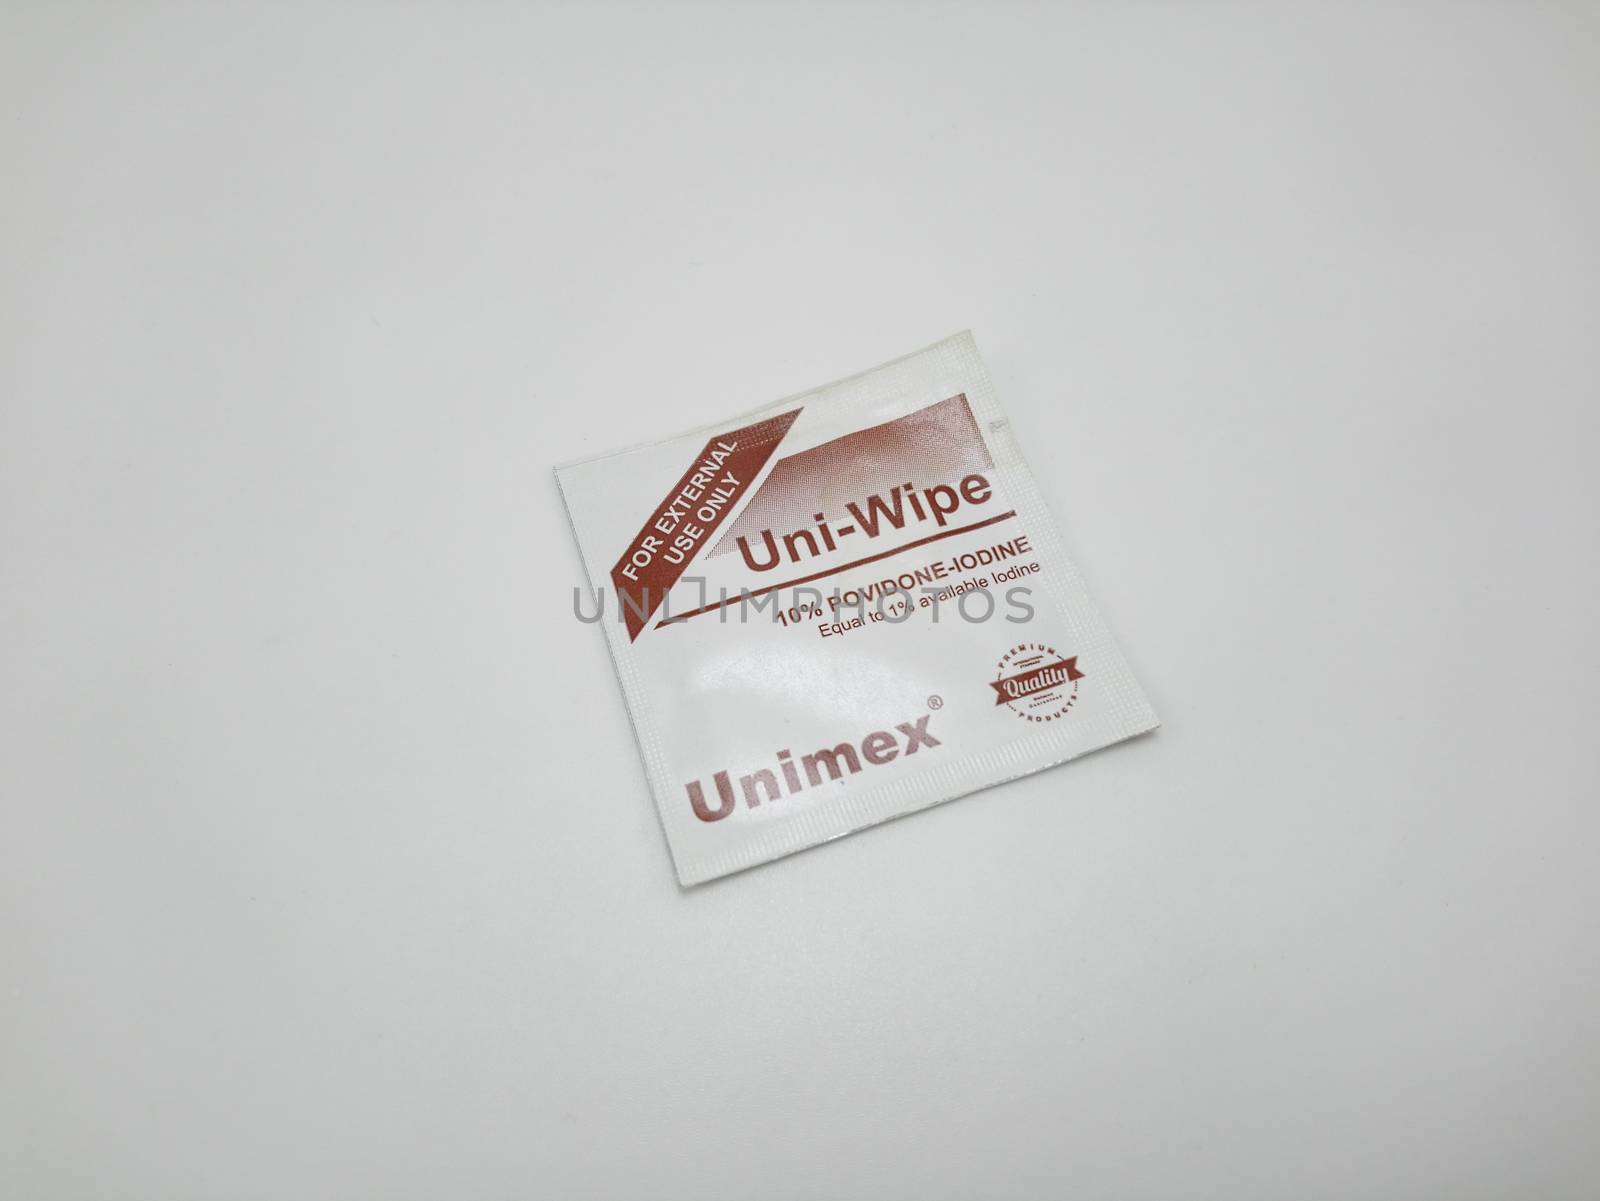 MANILA, PH - SEPT 25 - Unimex uni wipe povidone iodine alcohol wipes on September 25, 2020 in Manila, Philippines.